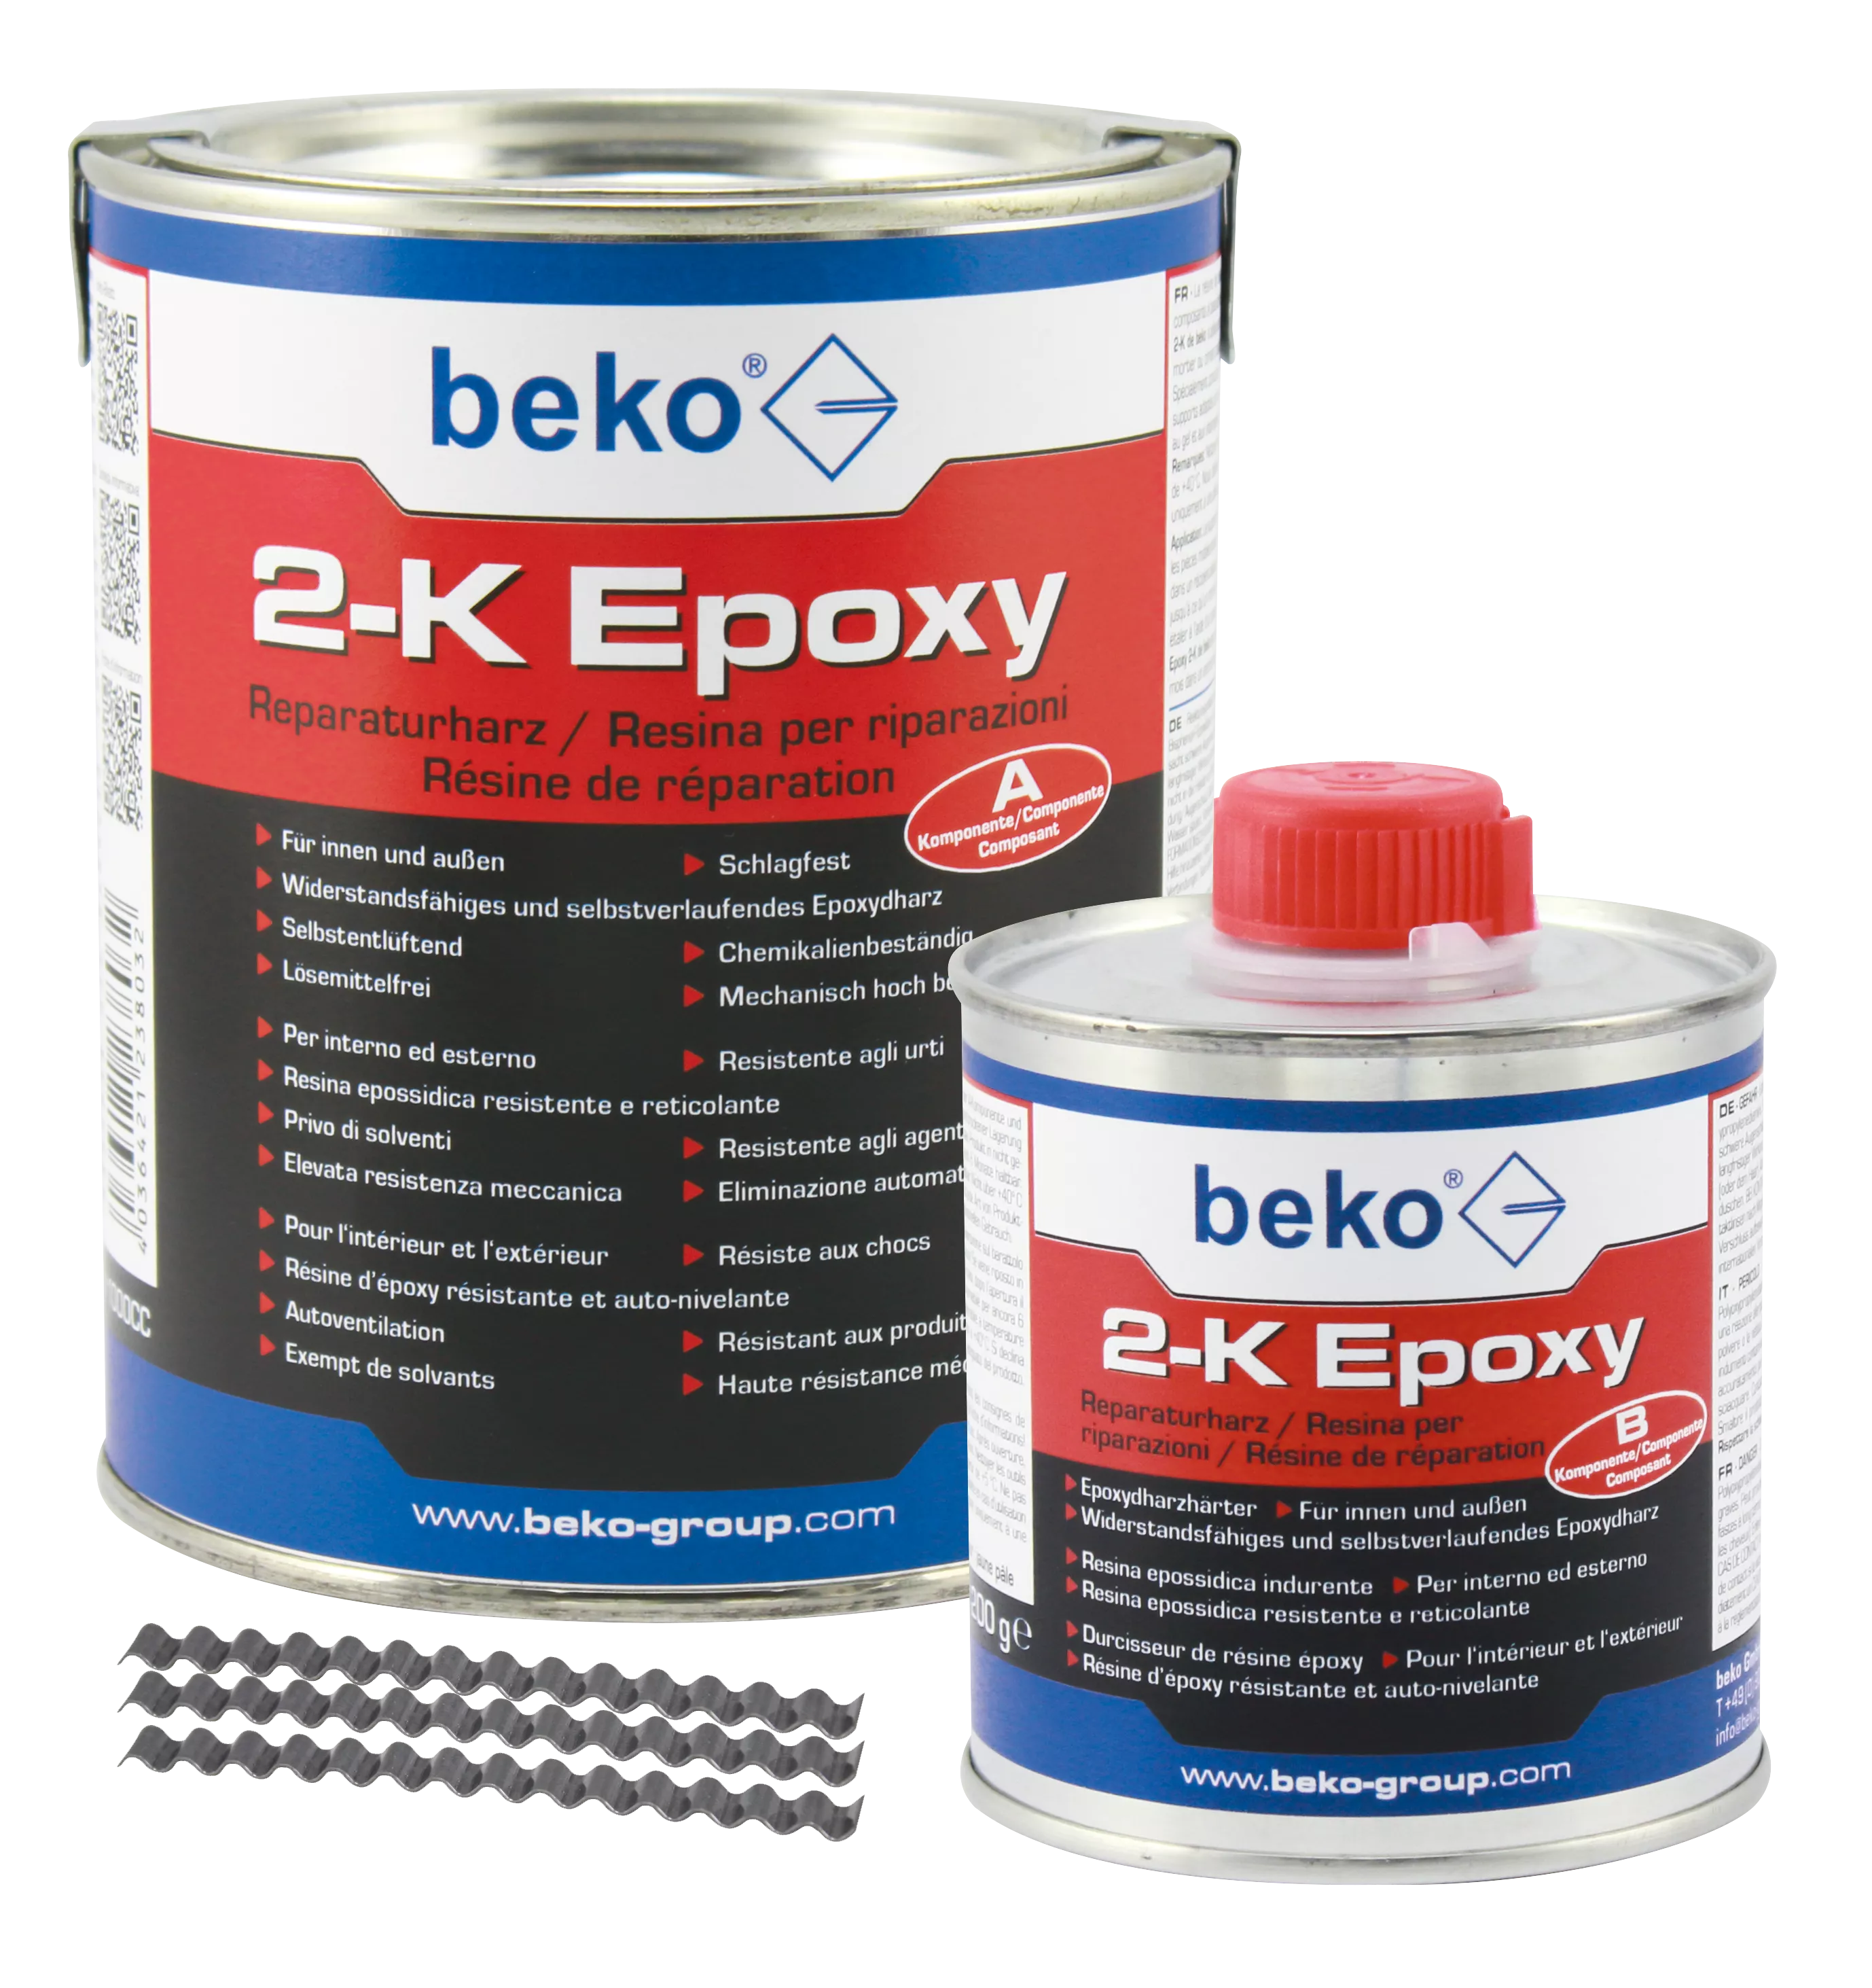 beko 2-K Epoxy Reparaturharz 1 kg, inkl. 10 x Estrichklammern